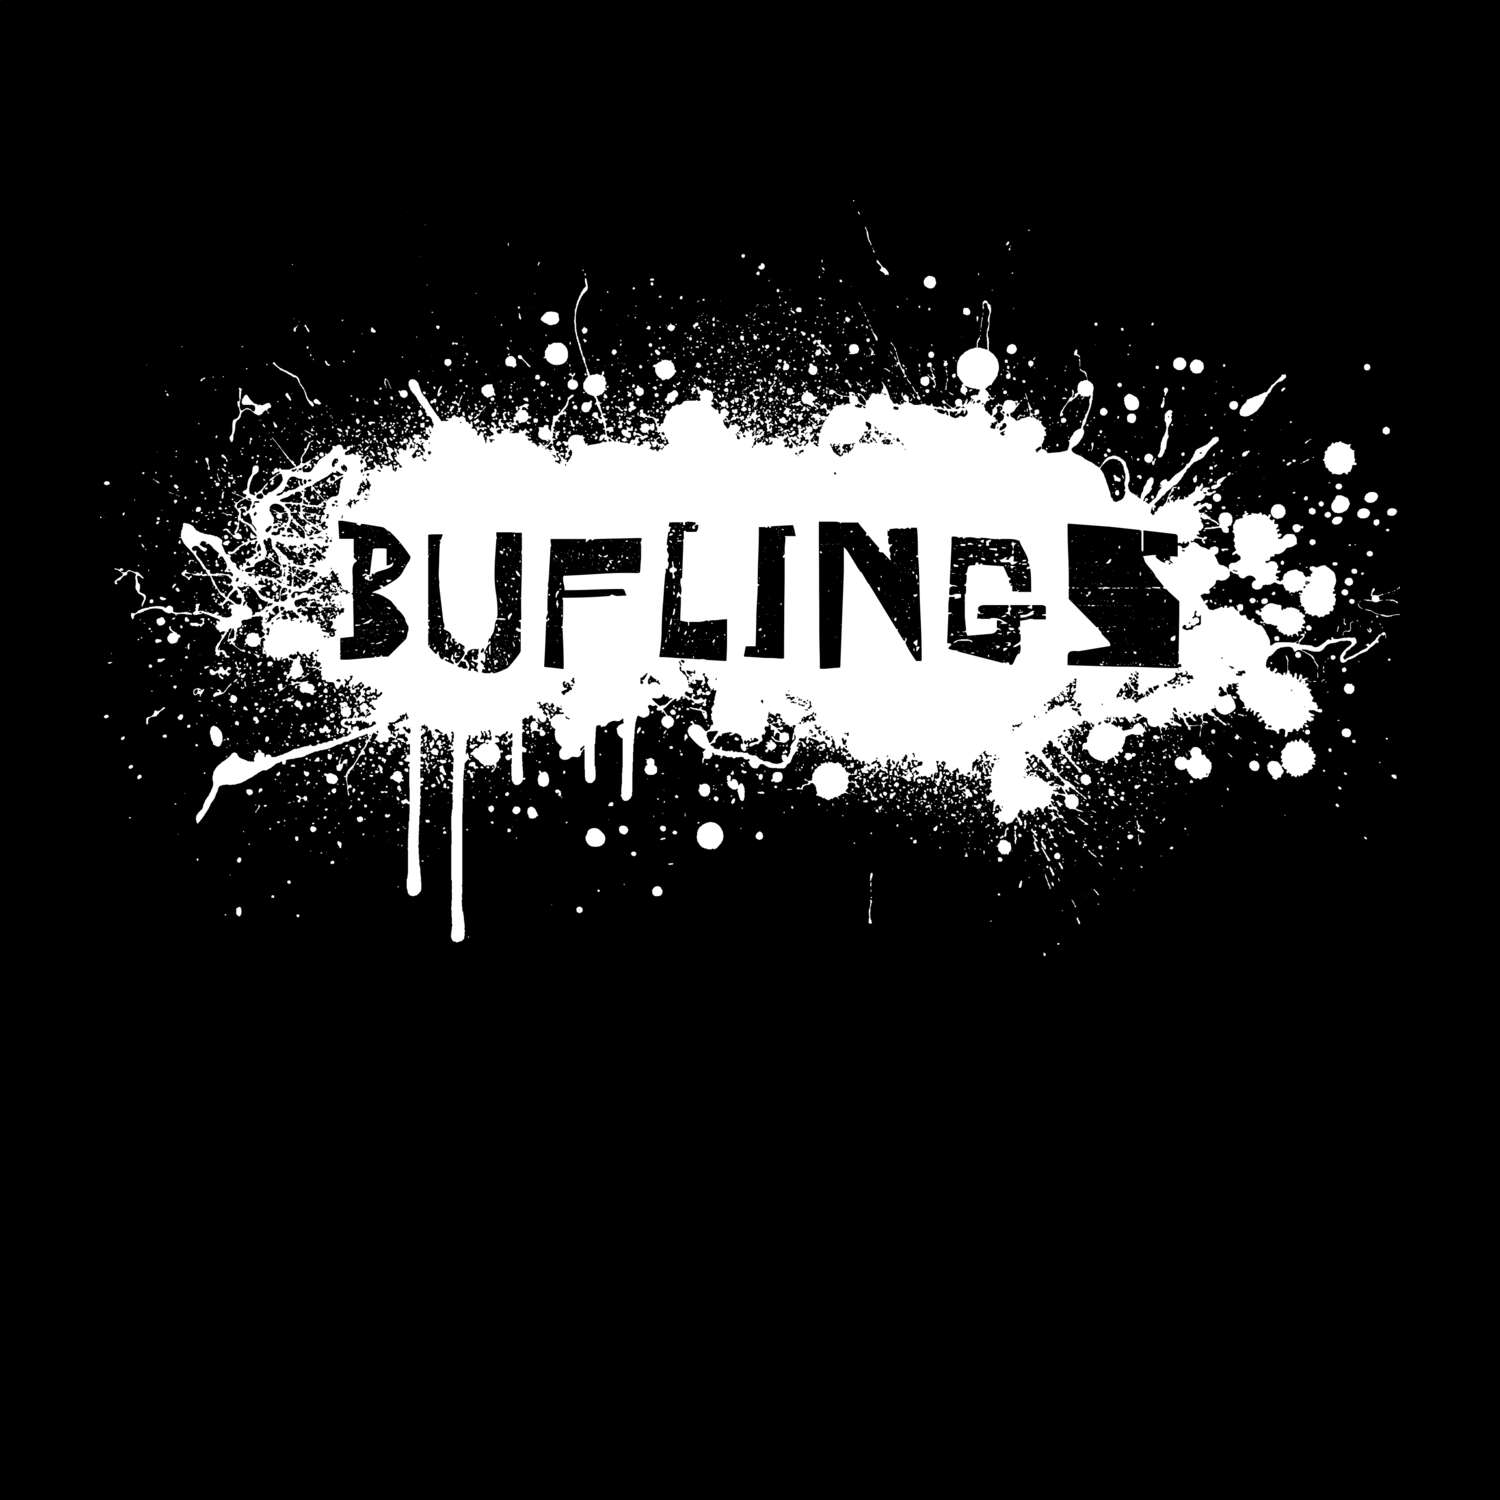 Buflings T-Shirt »Paint Splash Punk«